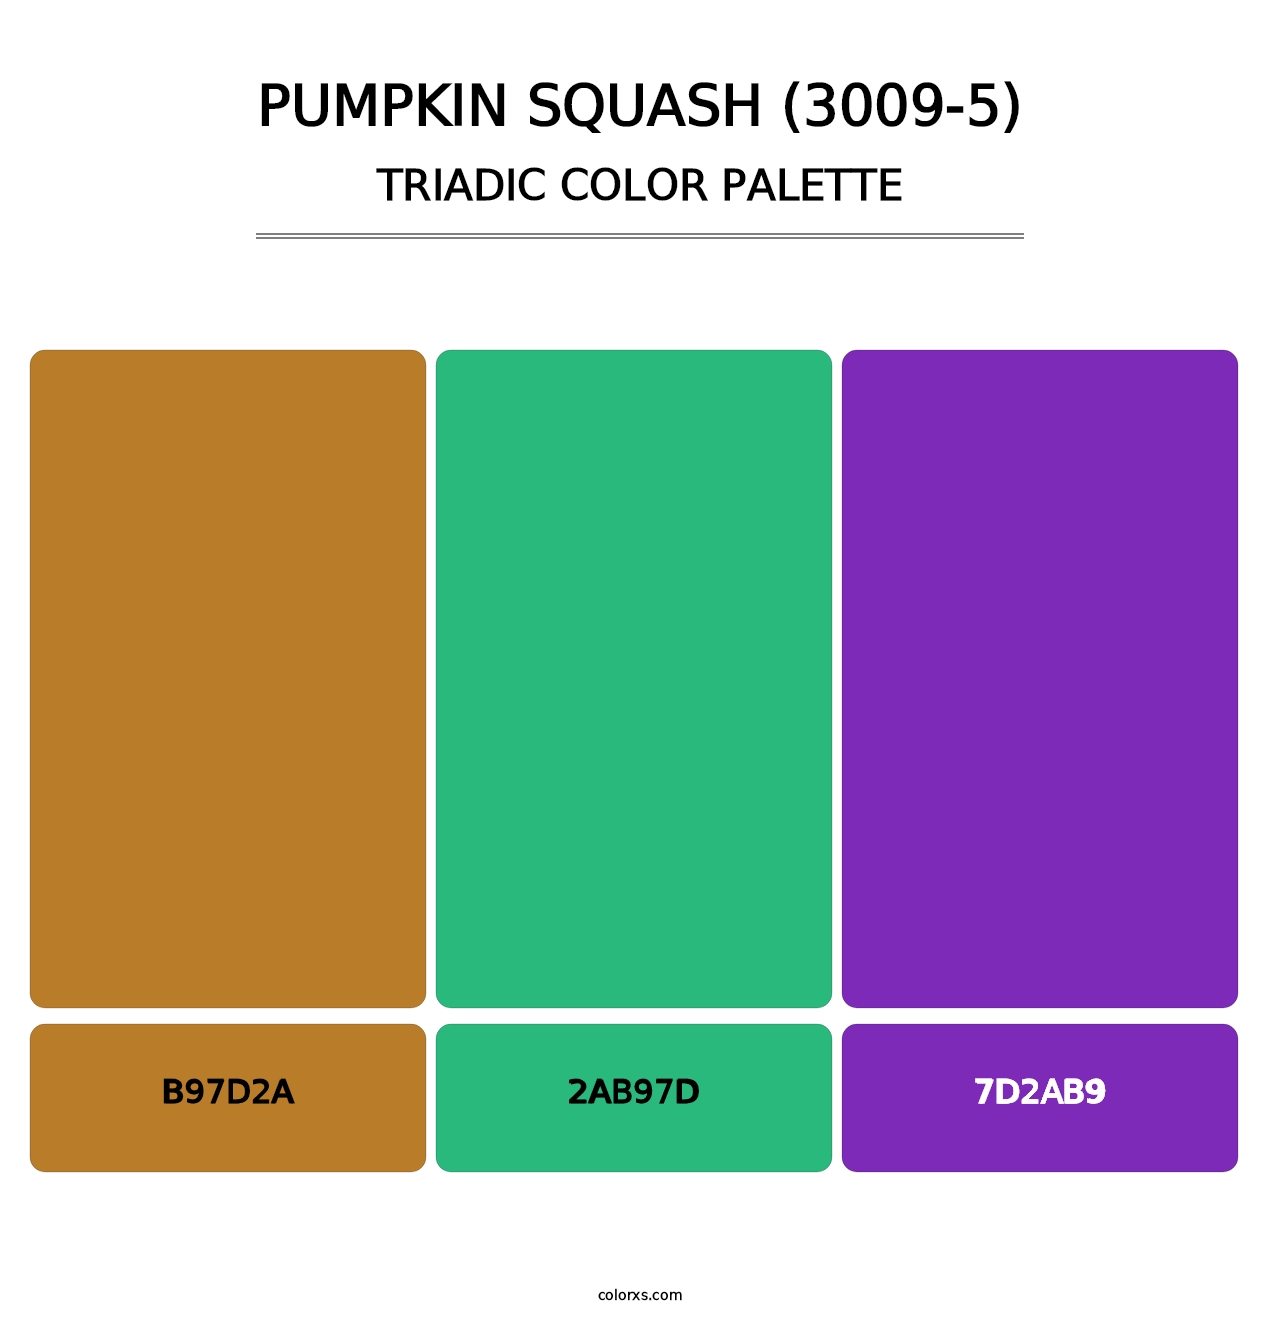 Pumpkin Squash (3009-5) - Triadic Color Palette